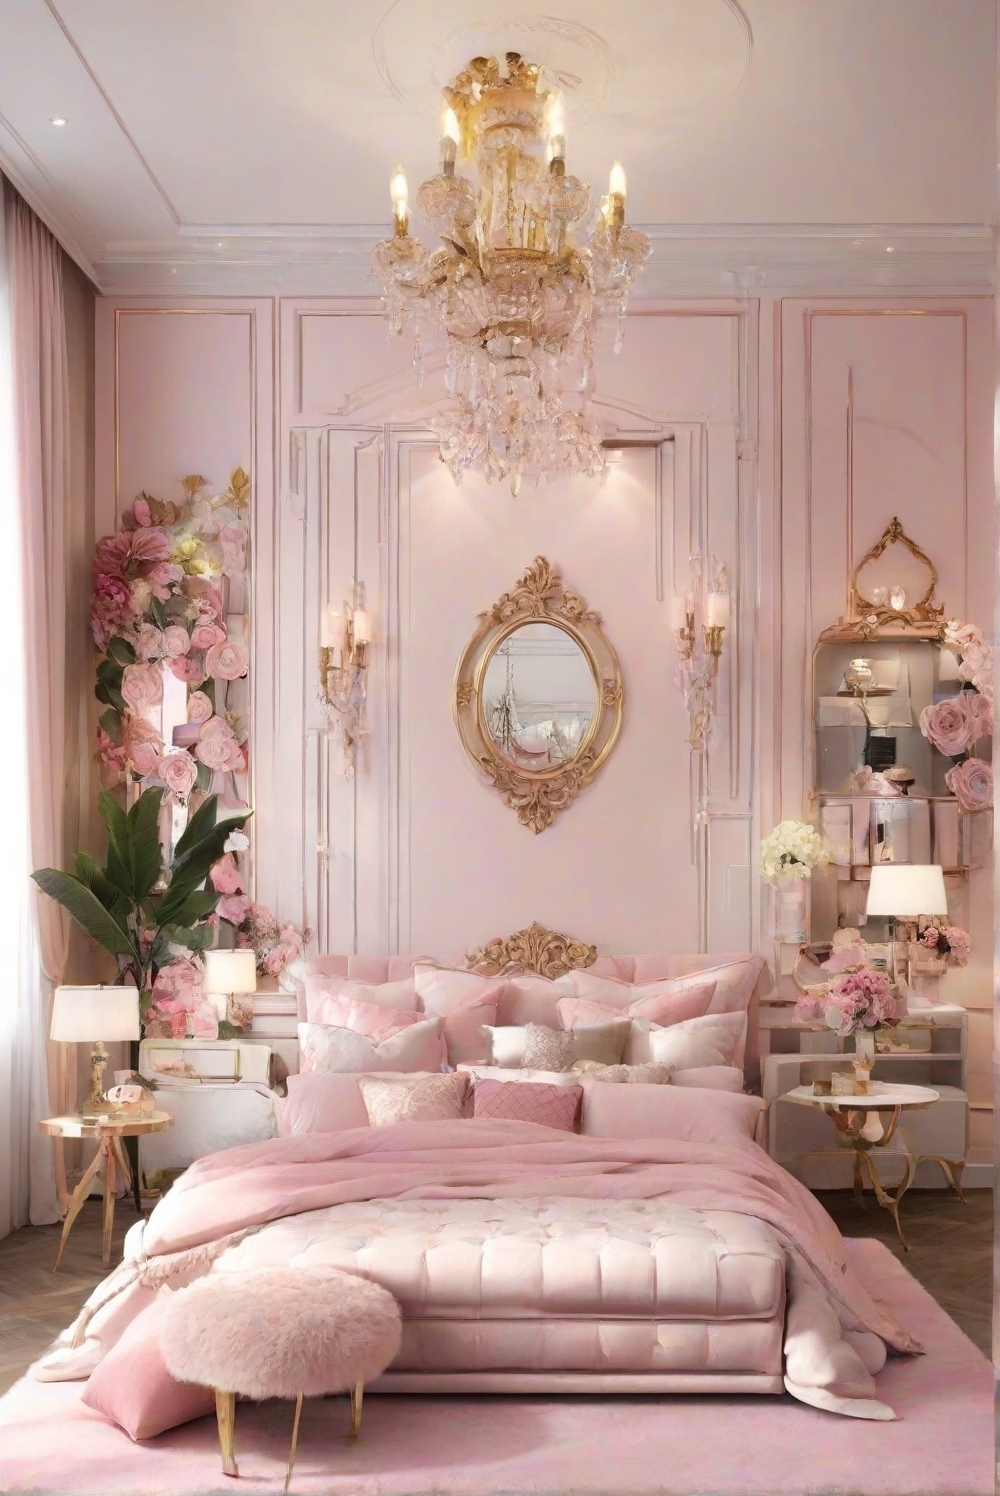 luxury interior design, antique furniture, decor accents, custom wallpaper, modern lighting, designer pillows, high-end finishes